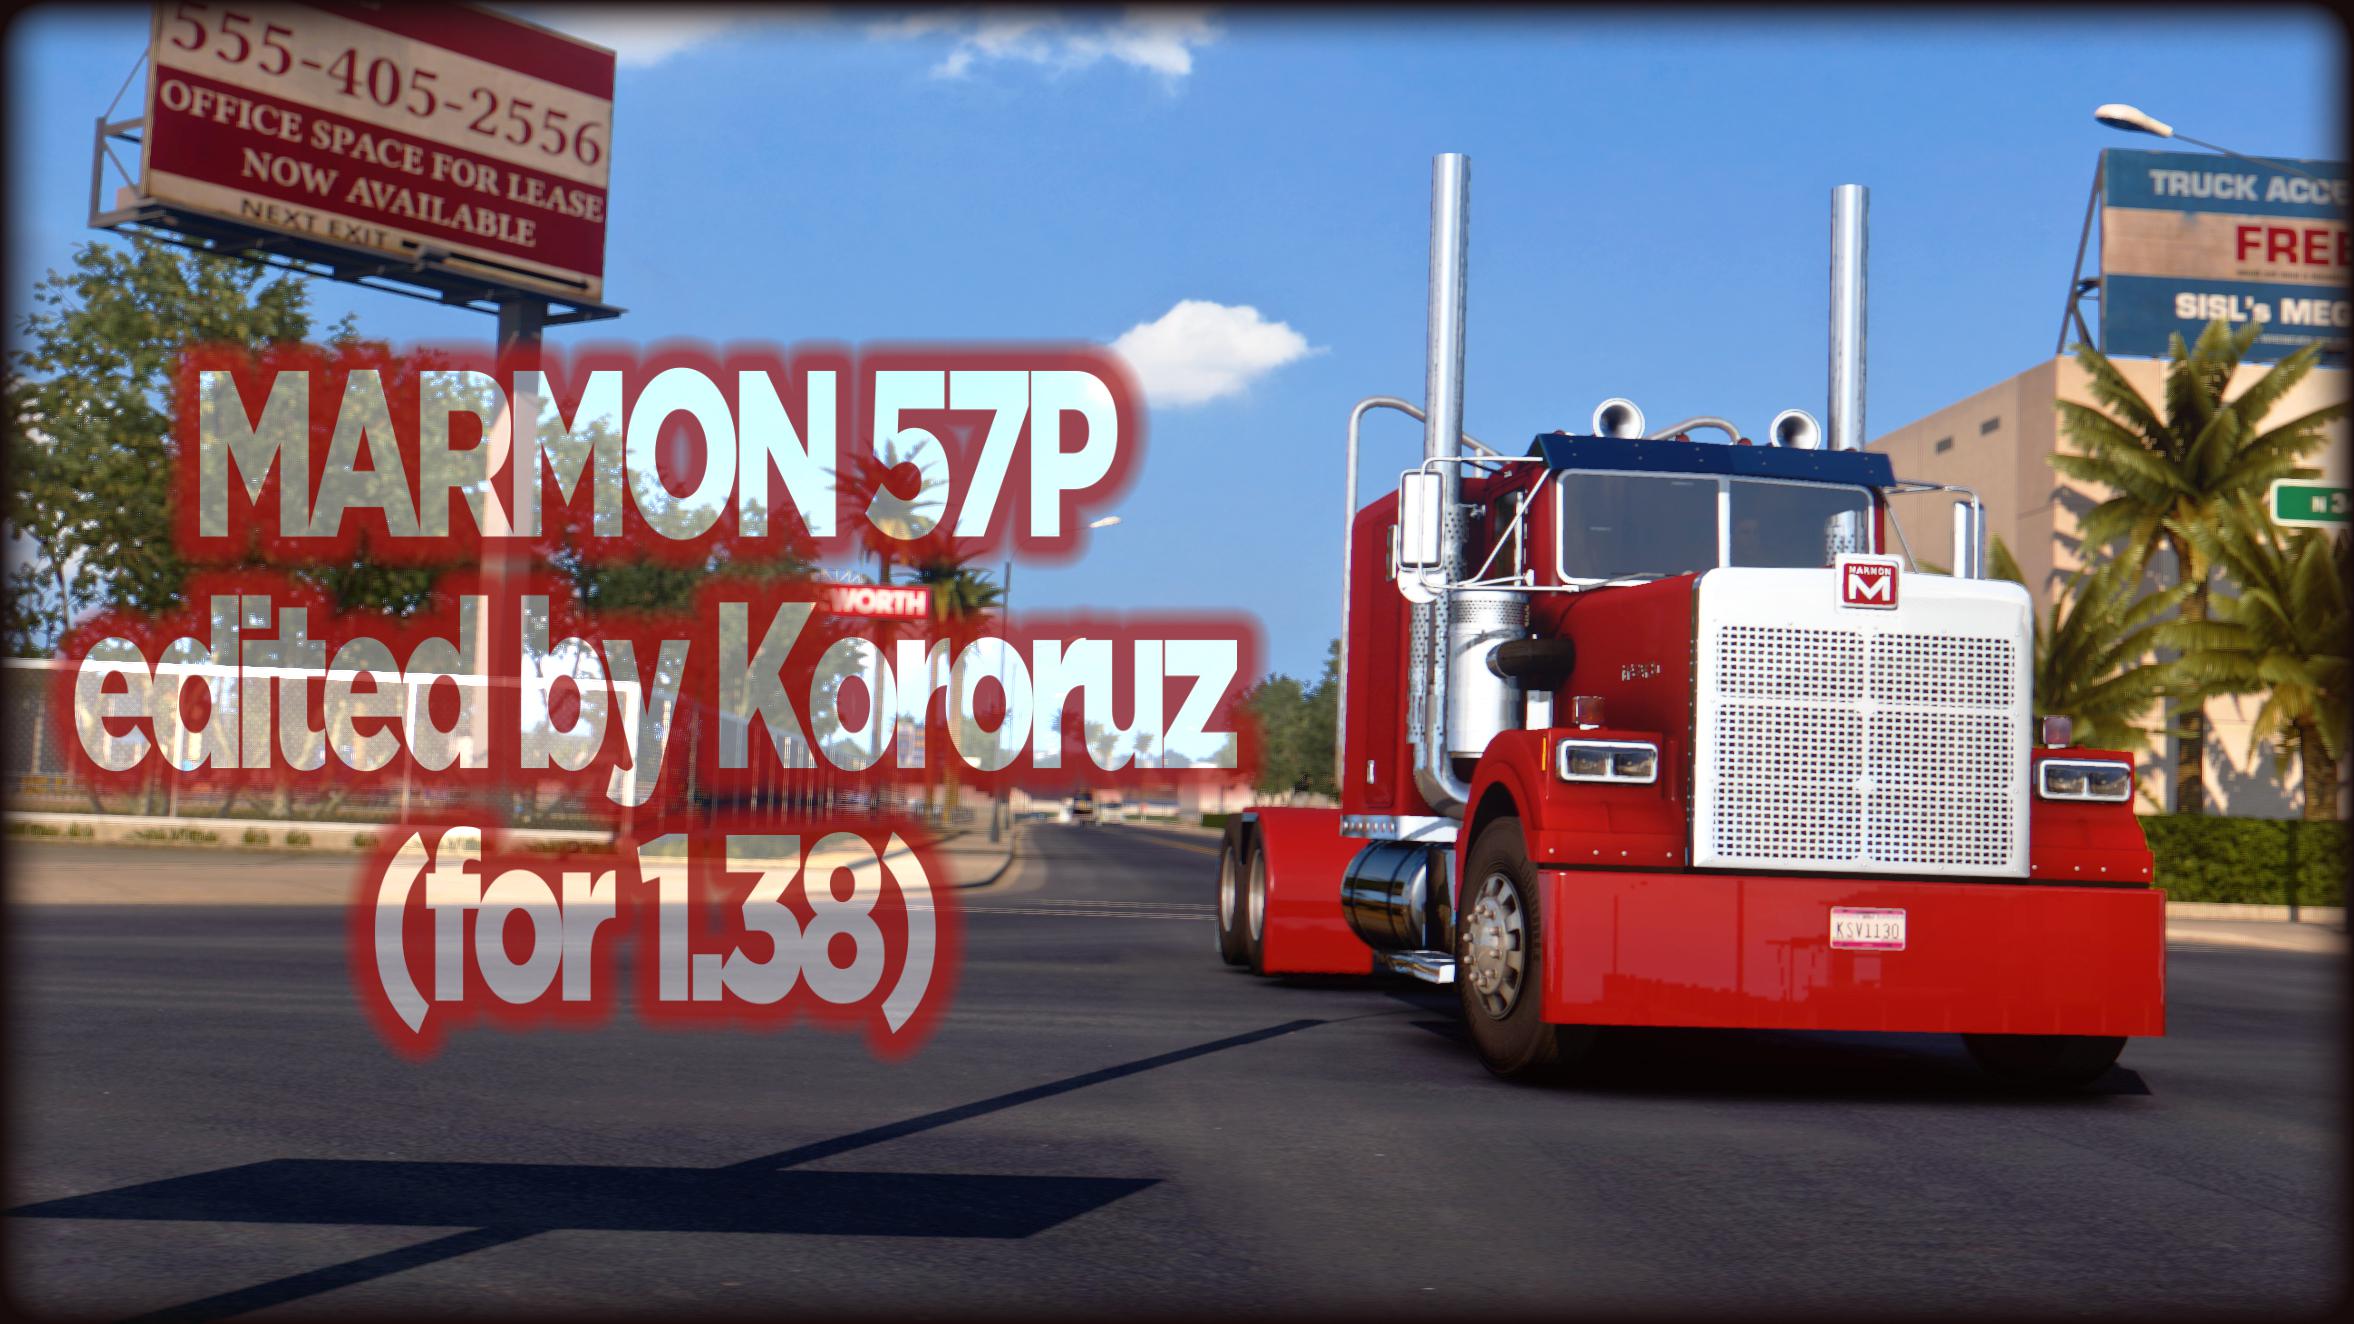 Ats Marmon 57p Truck V099 138x American Truck Simulator Modsclub